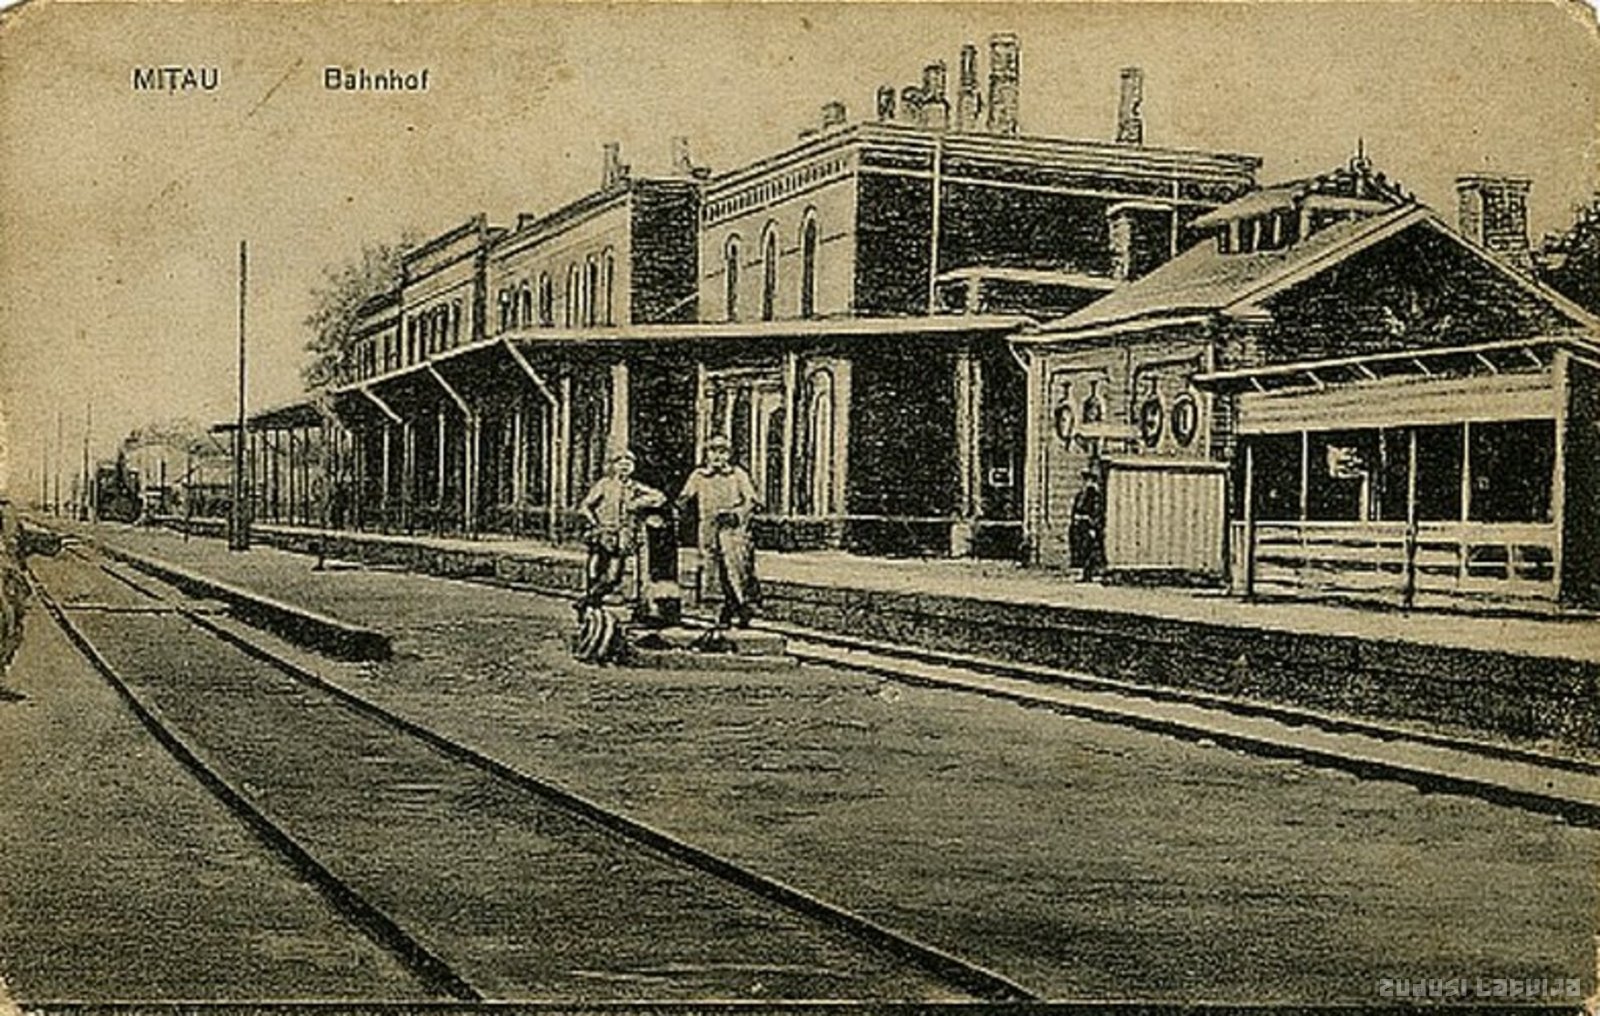 Jelgava railway station, Mitau. Railway station